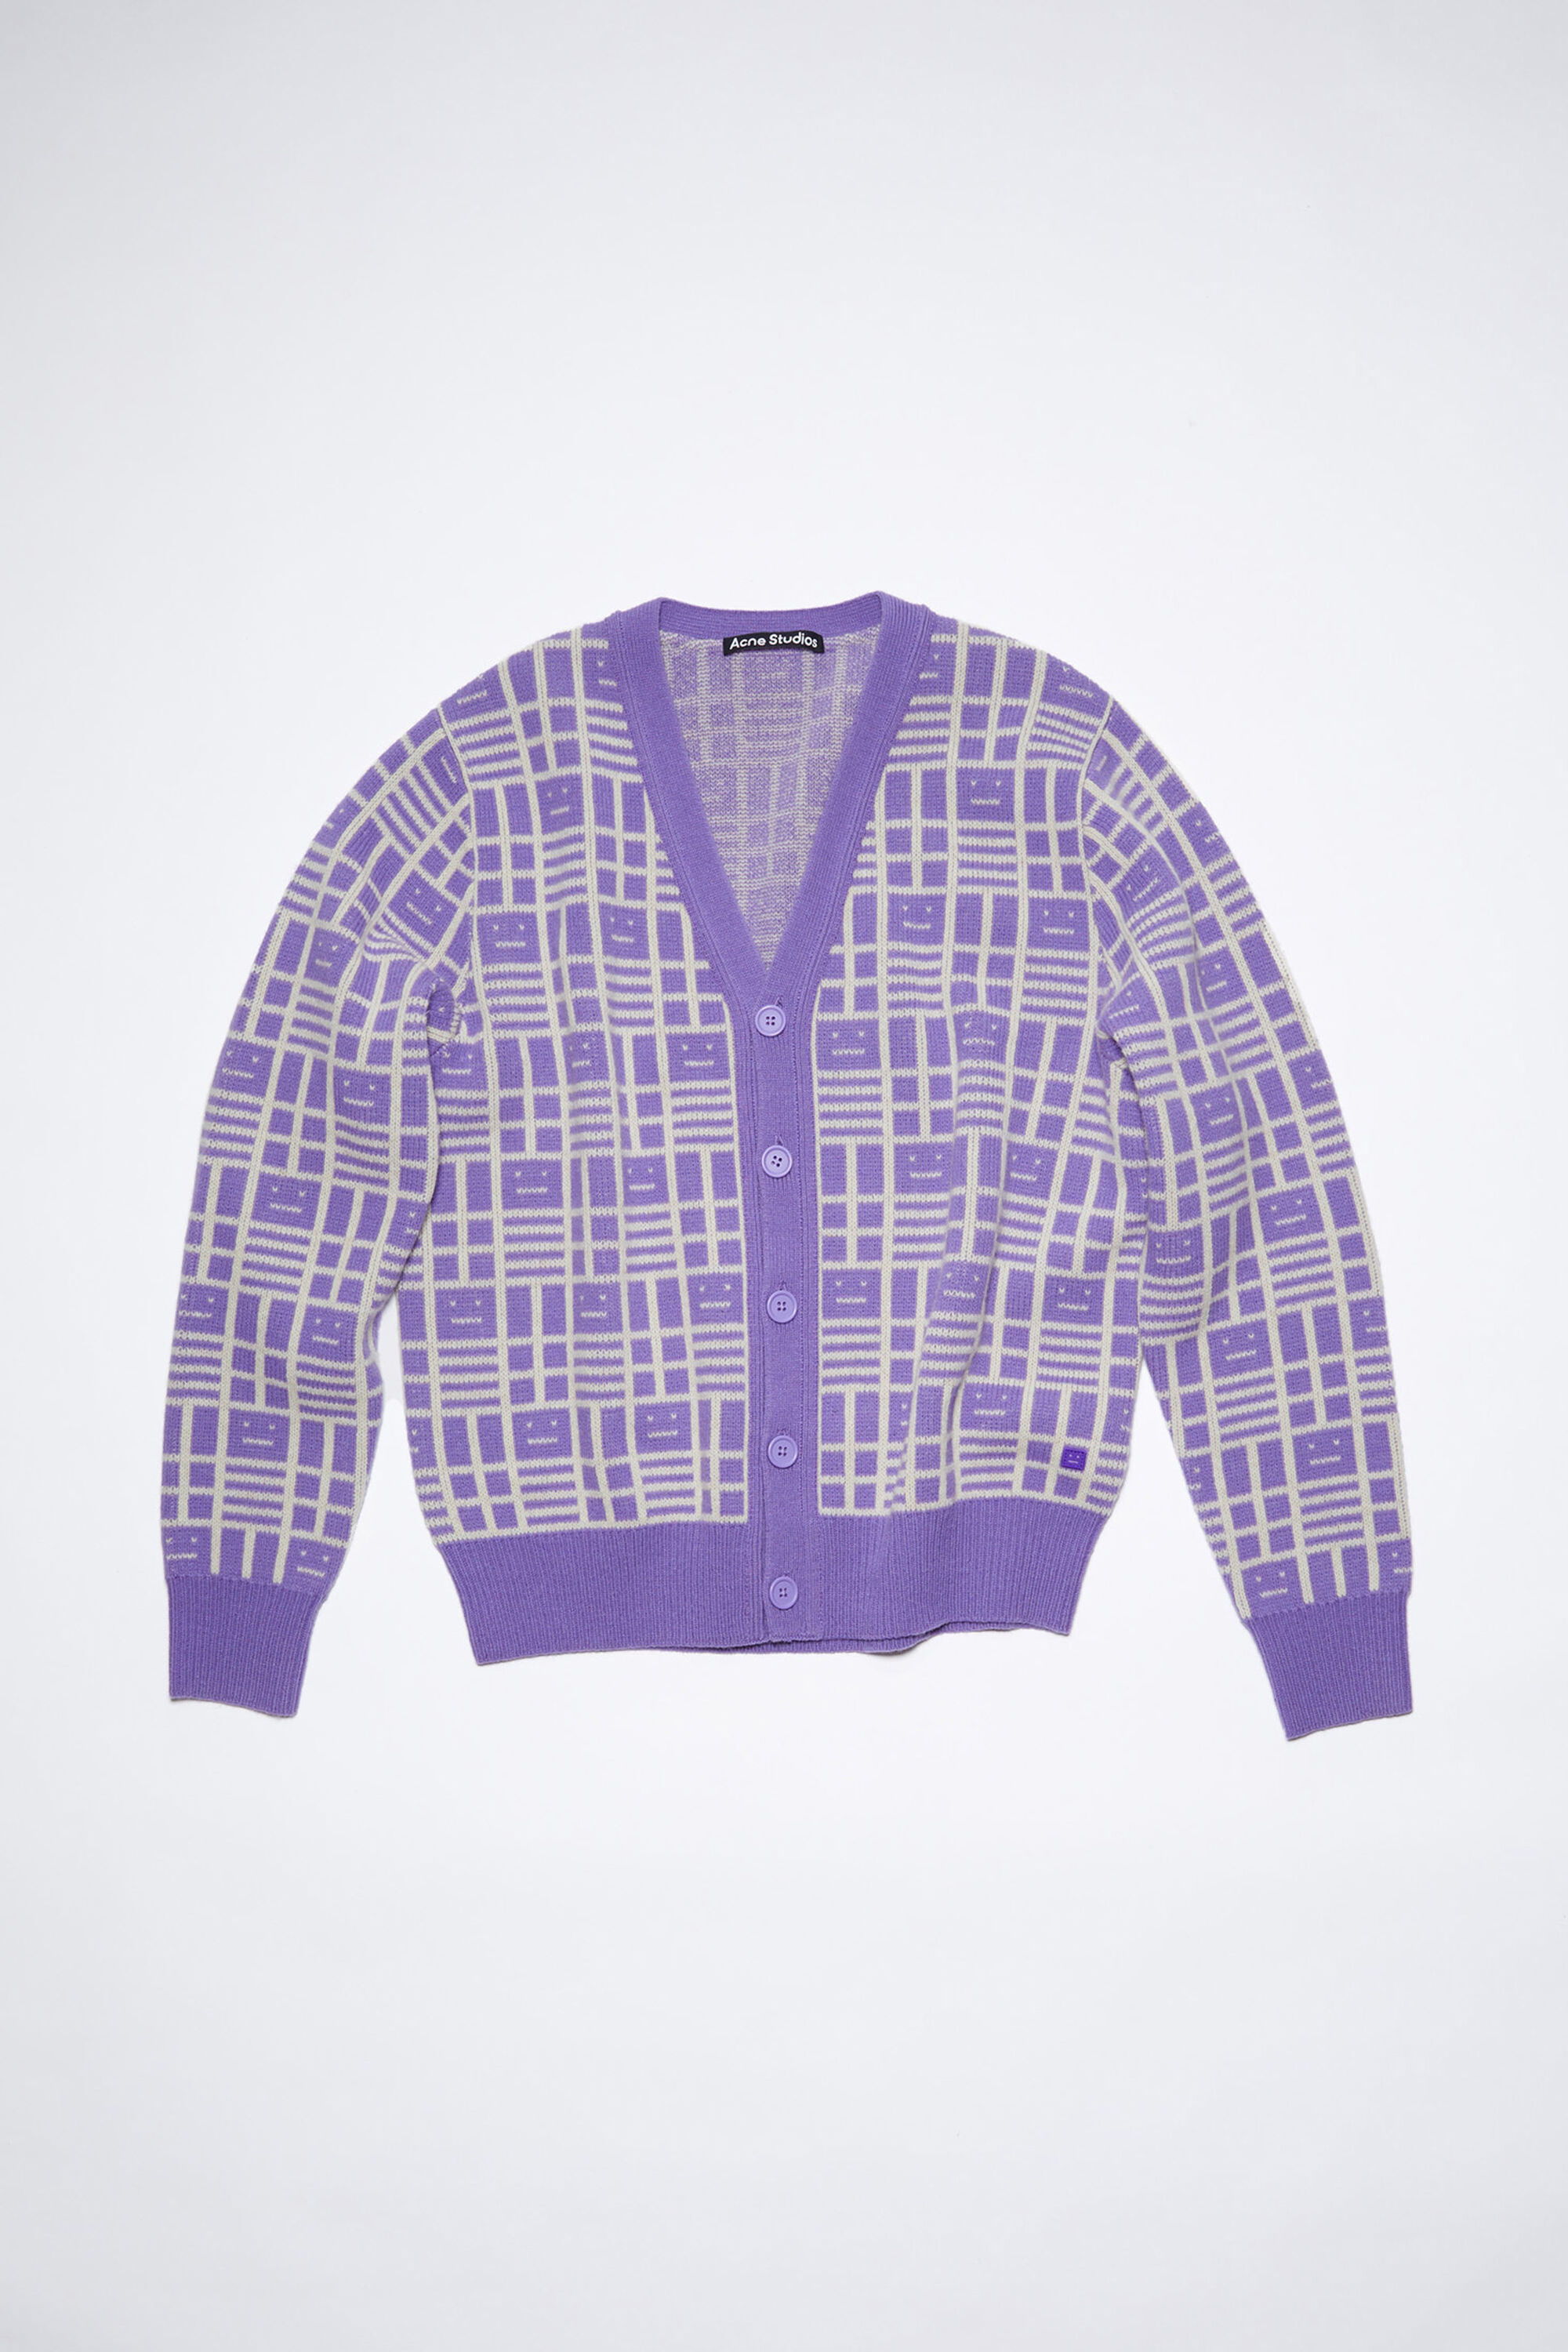 Acne Studios - Knit cardigan - Iris purple